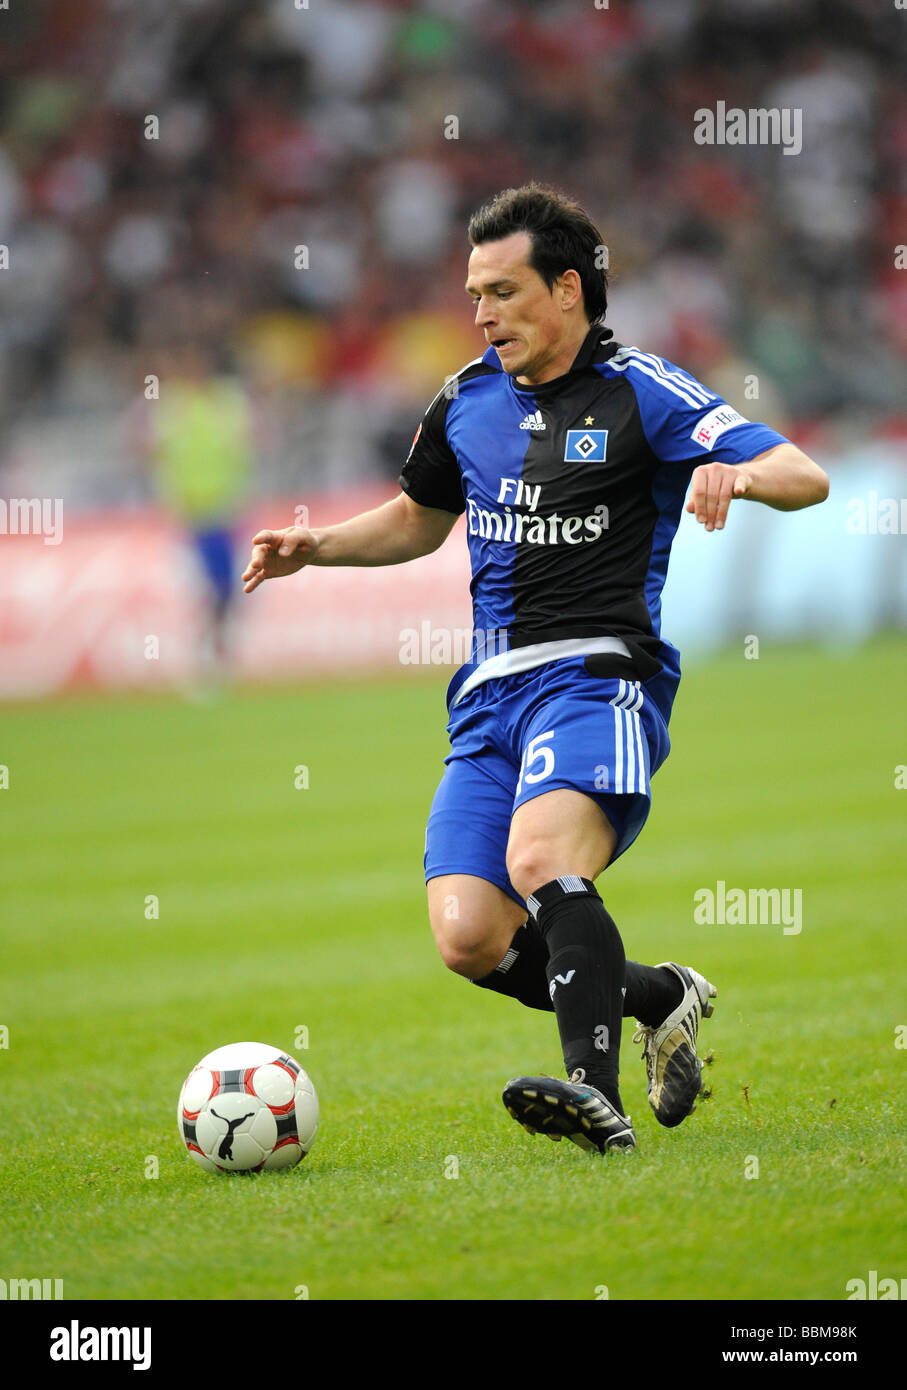 International Piotr Trochowski, German footballer playing for HSV, Hamburger SV, on the ball Stock Photo